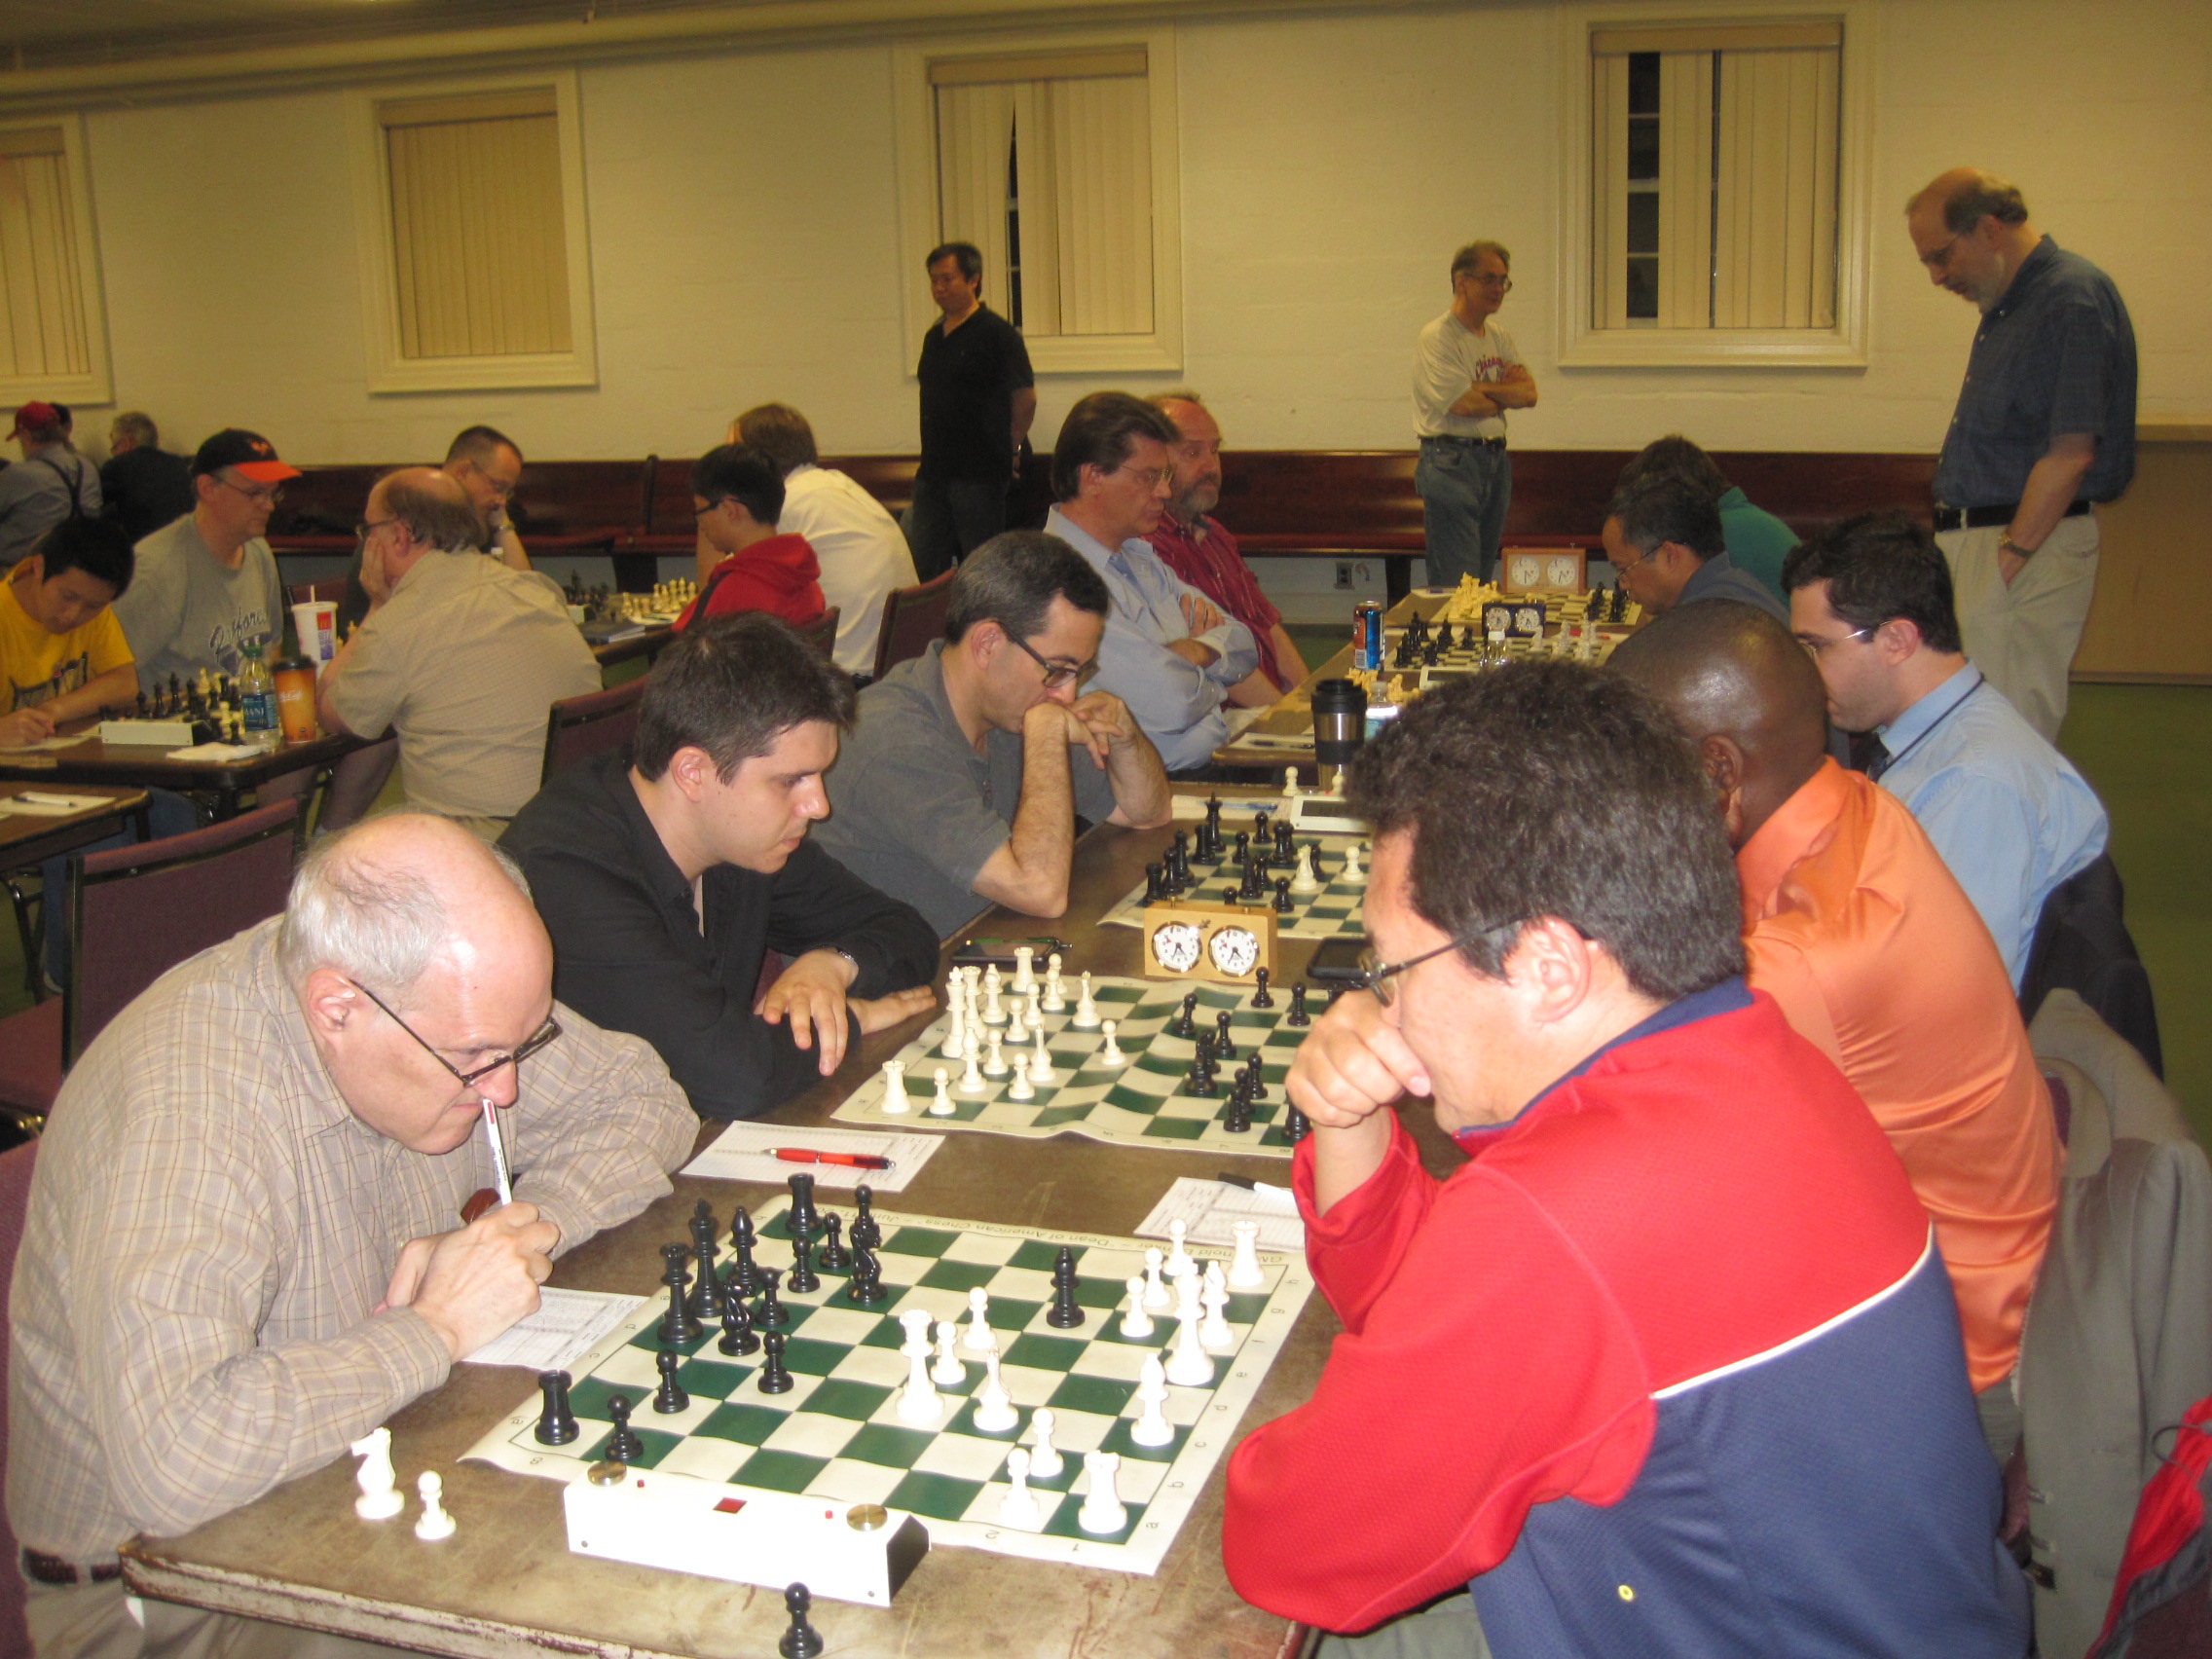 chesstempo - Chess Club 